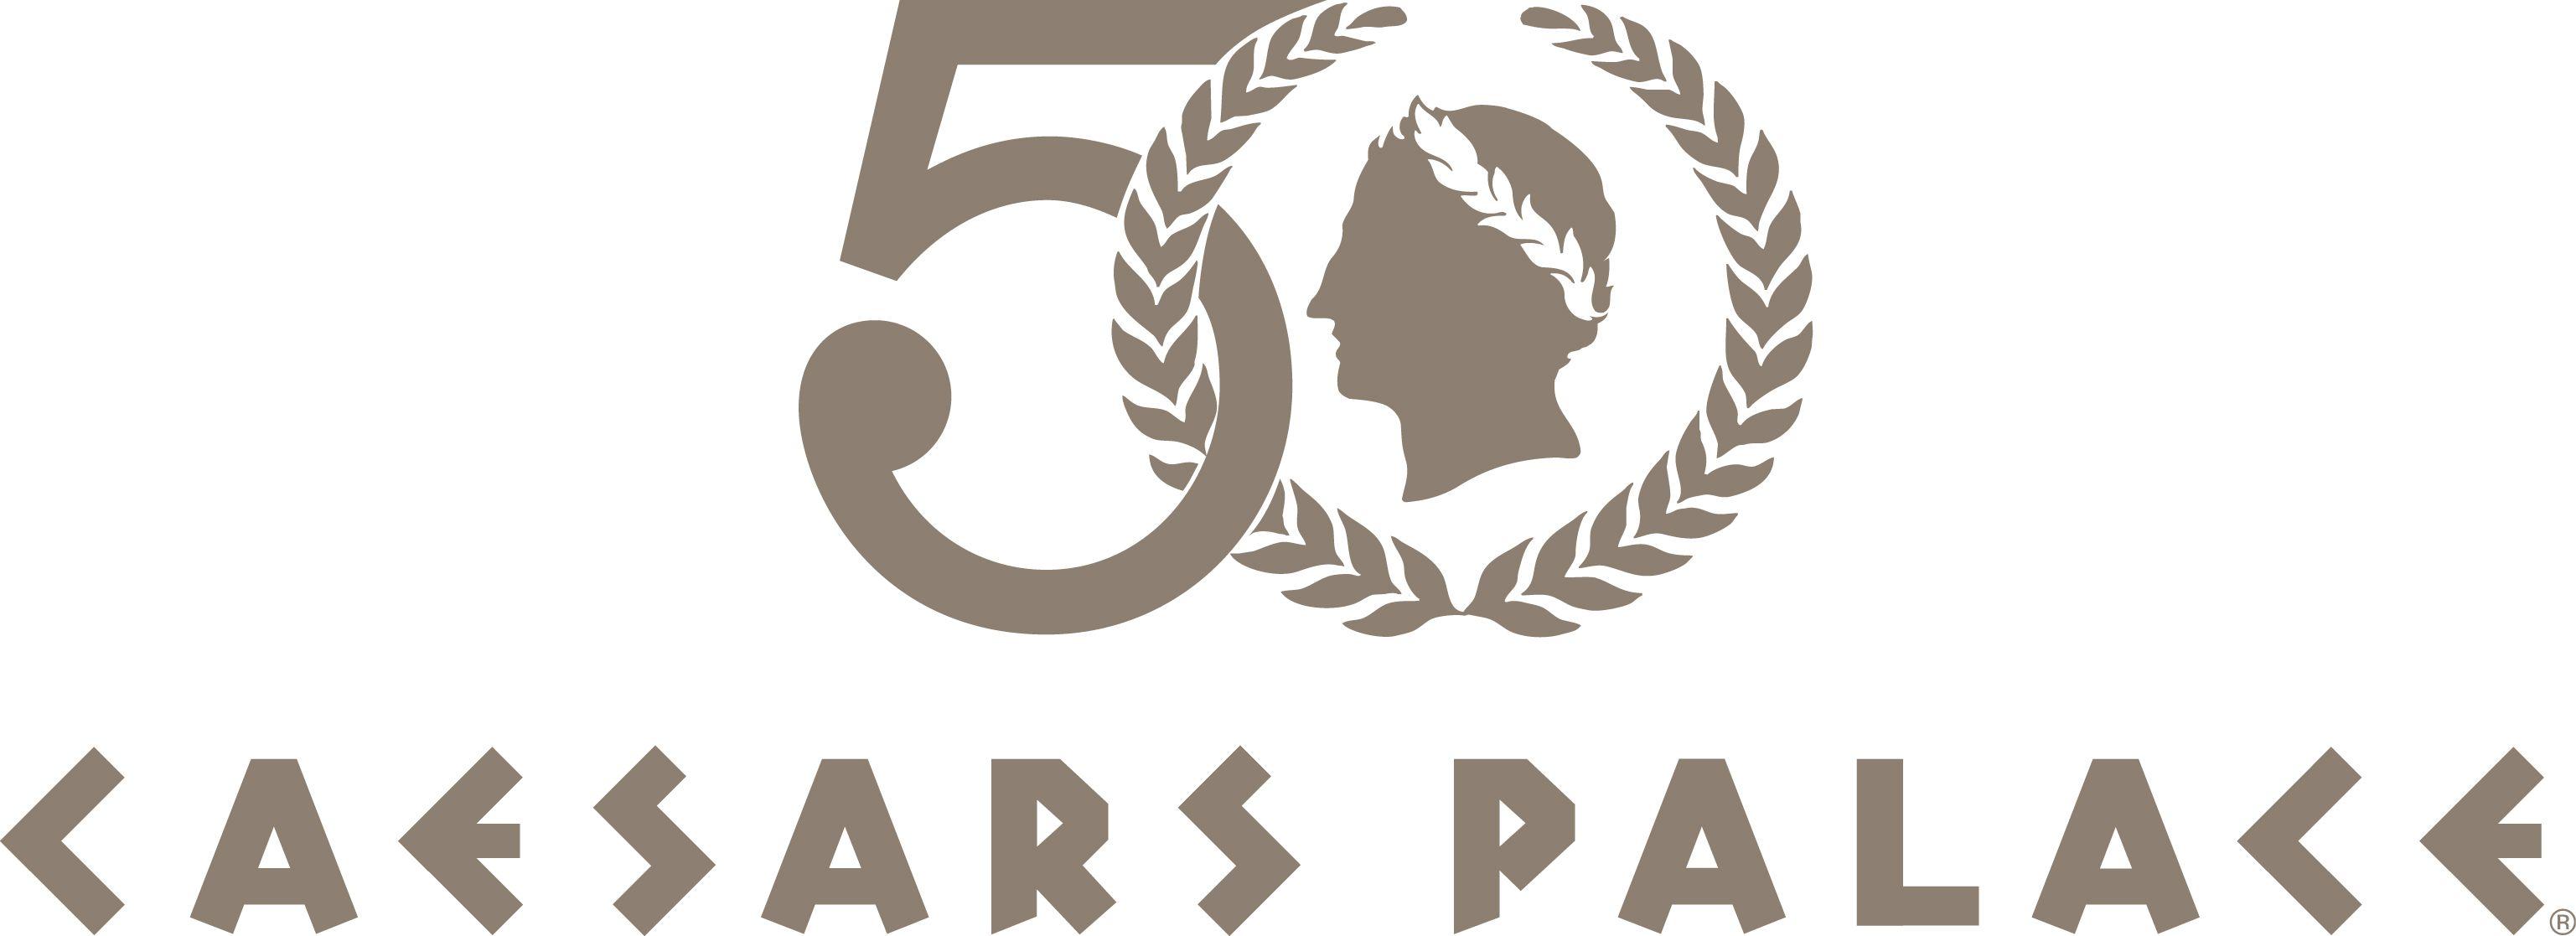 Vegas Caesars Palace Logo - The Eternally Cool Caesars Palace! - TravelPress